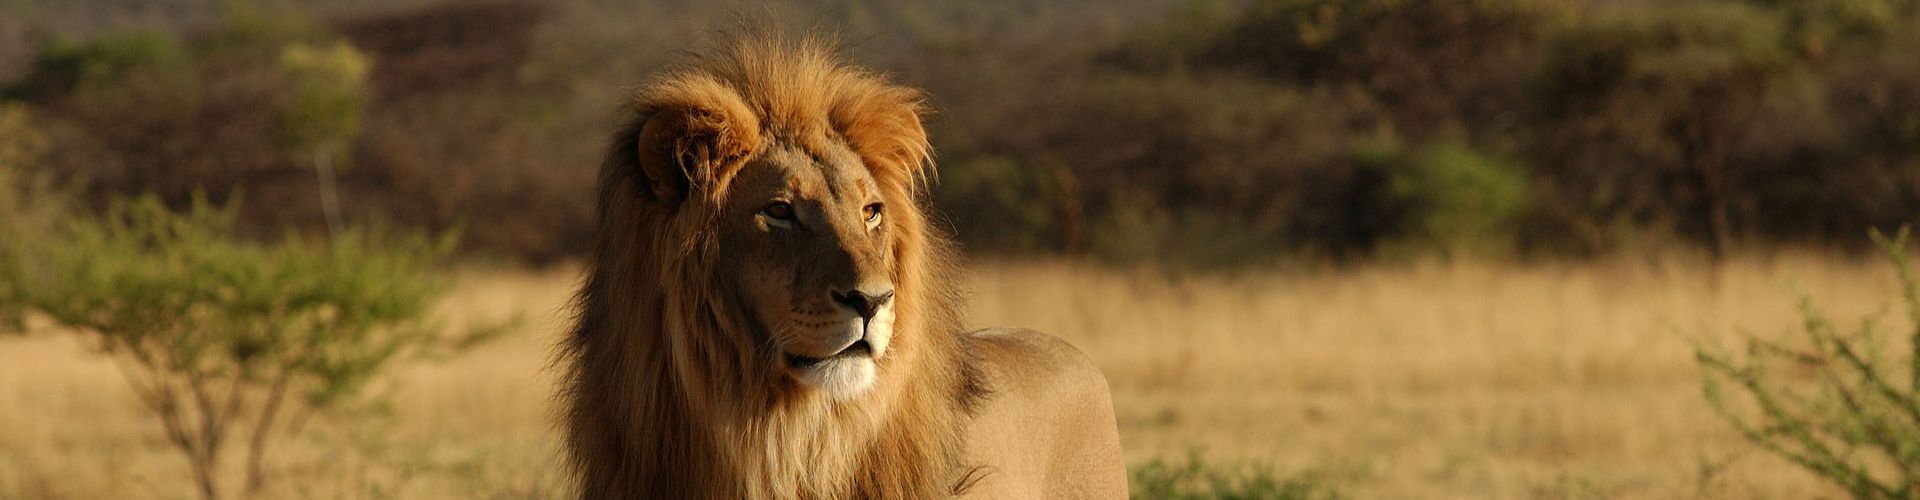 Ervaar Tanzania Safari Reizen van hoge kwaliteit met Shemeji Safari!